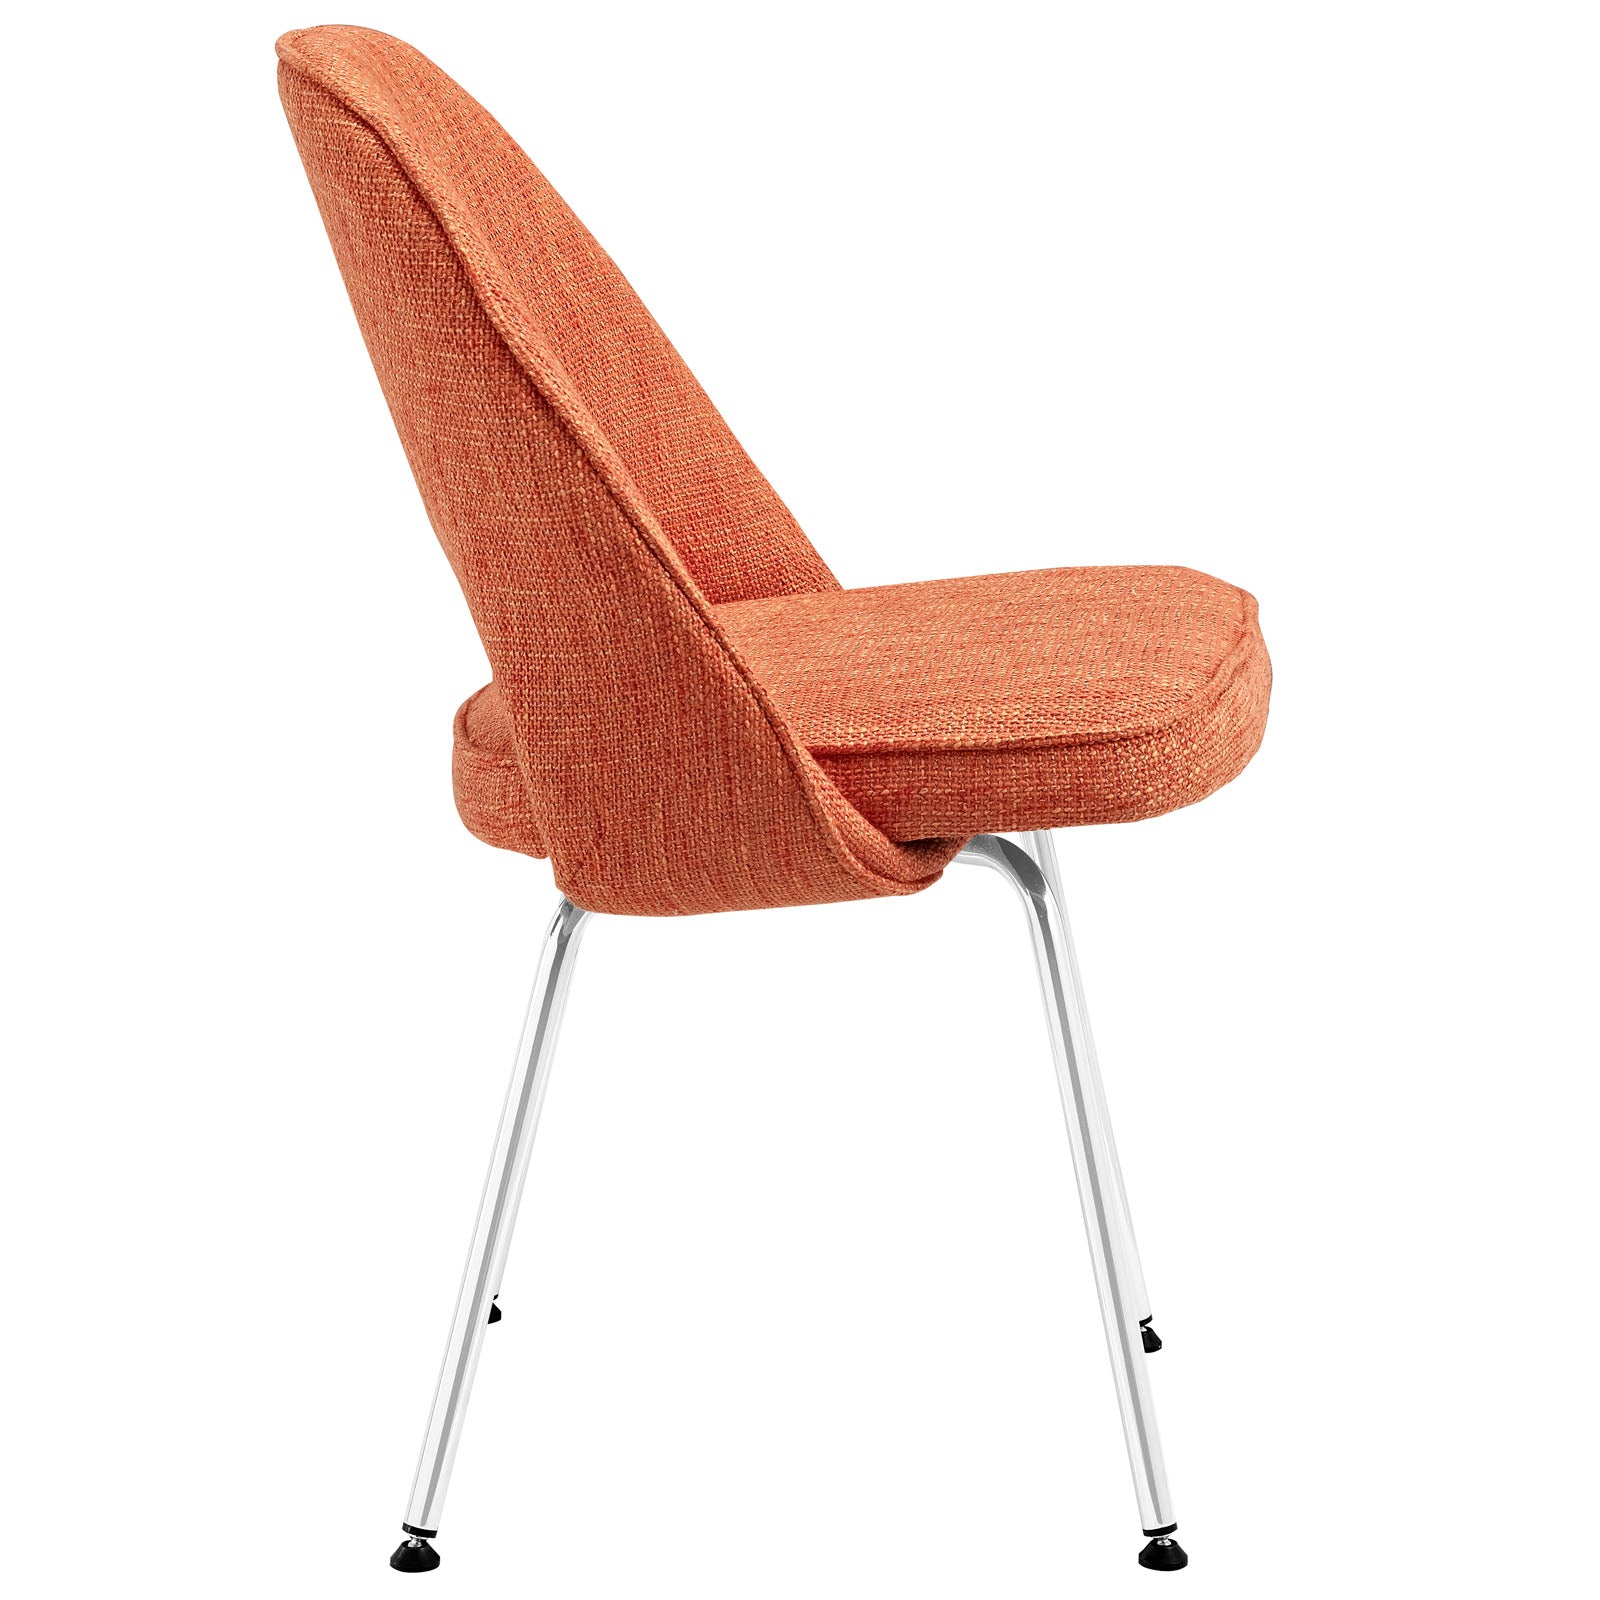 Cordelia Dining Fabric Side Chair - East Shore Modern Home Furnishings